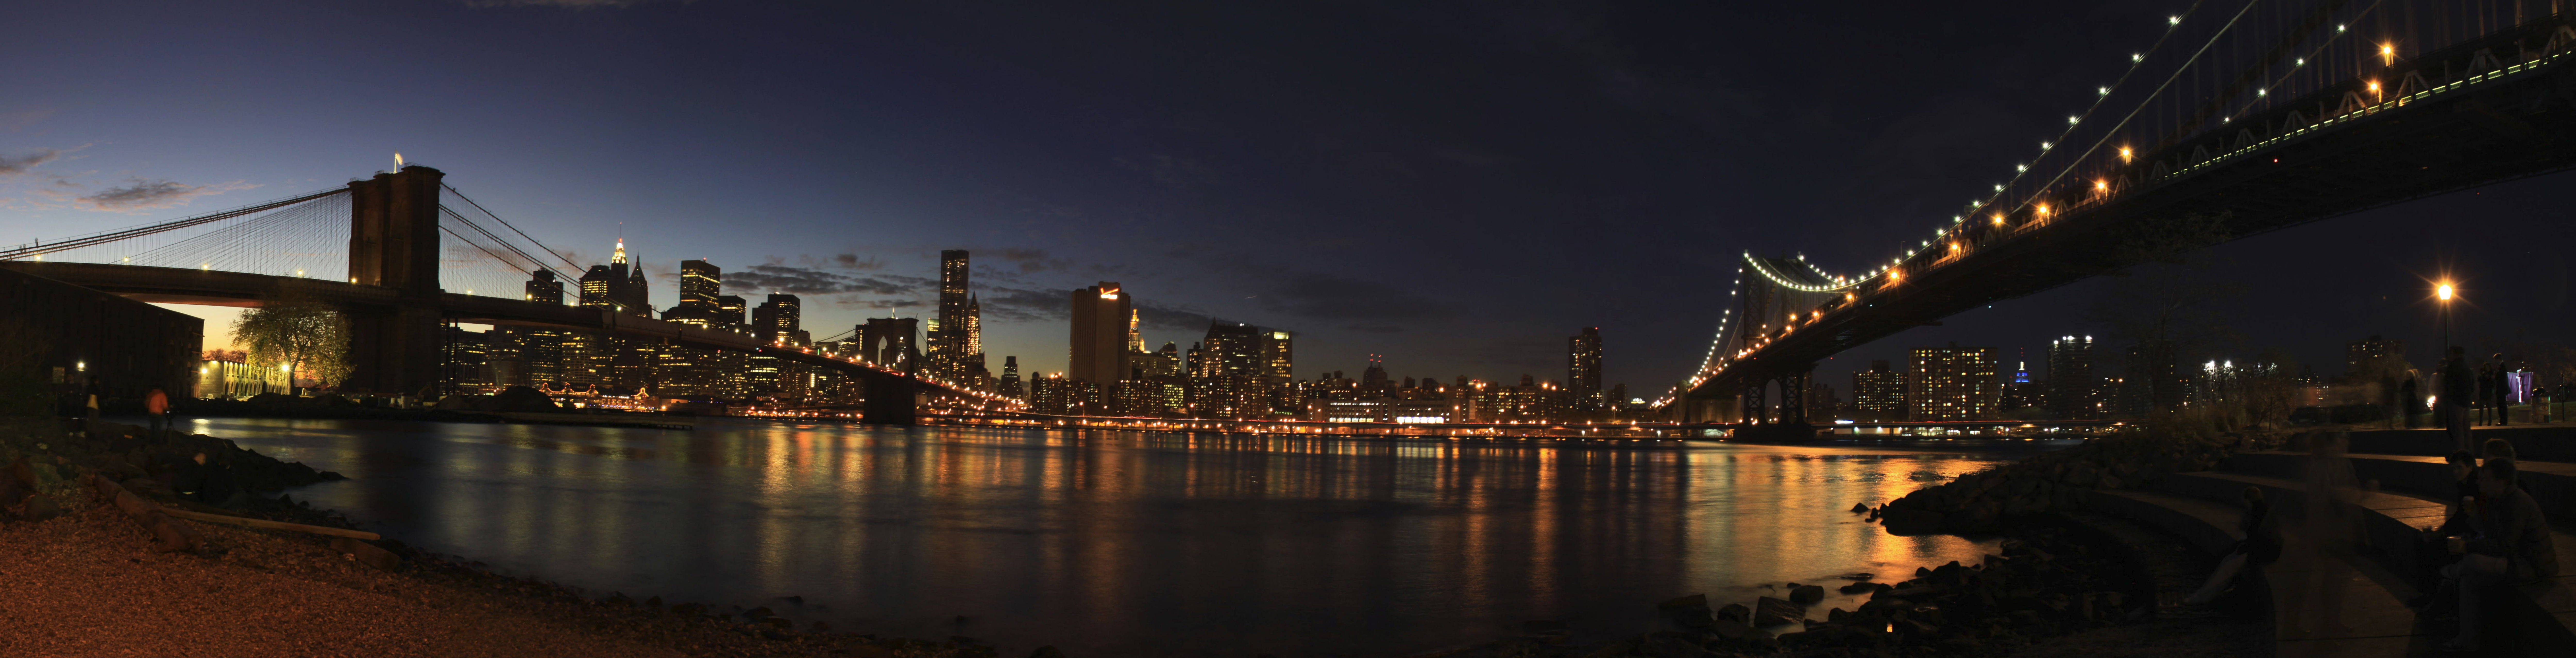 NYC Skyline Wallpaper